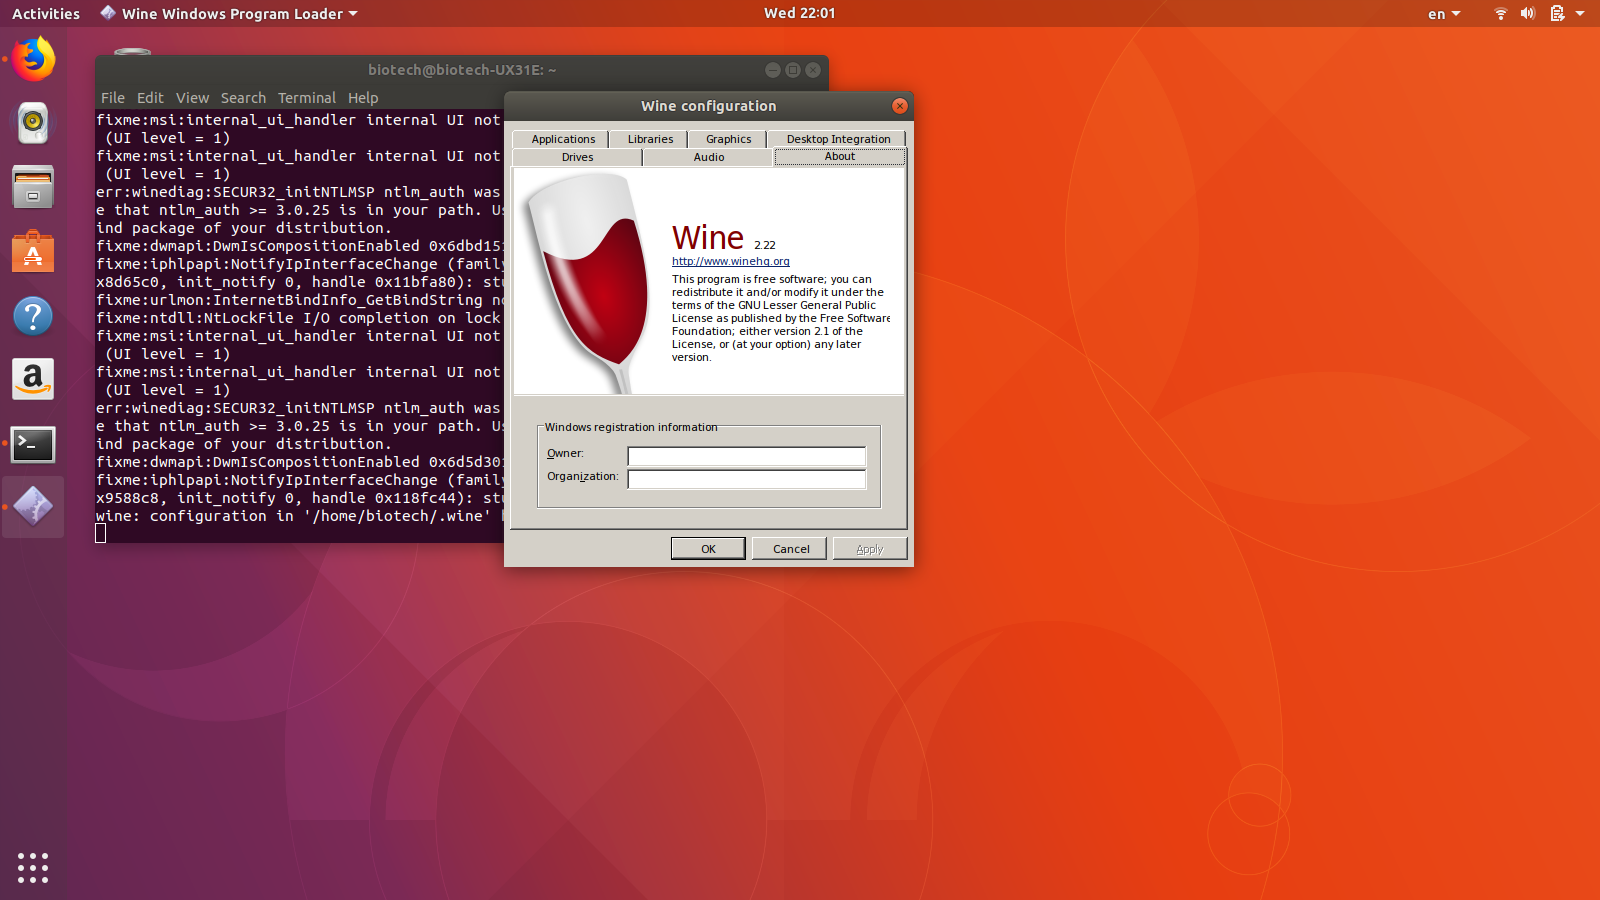 How to install program on Ubuntu: How to install Wine 27.2727